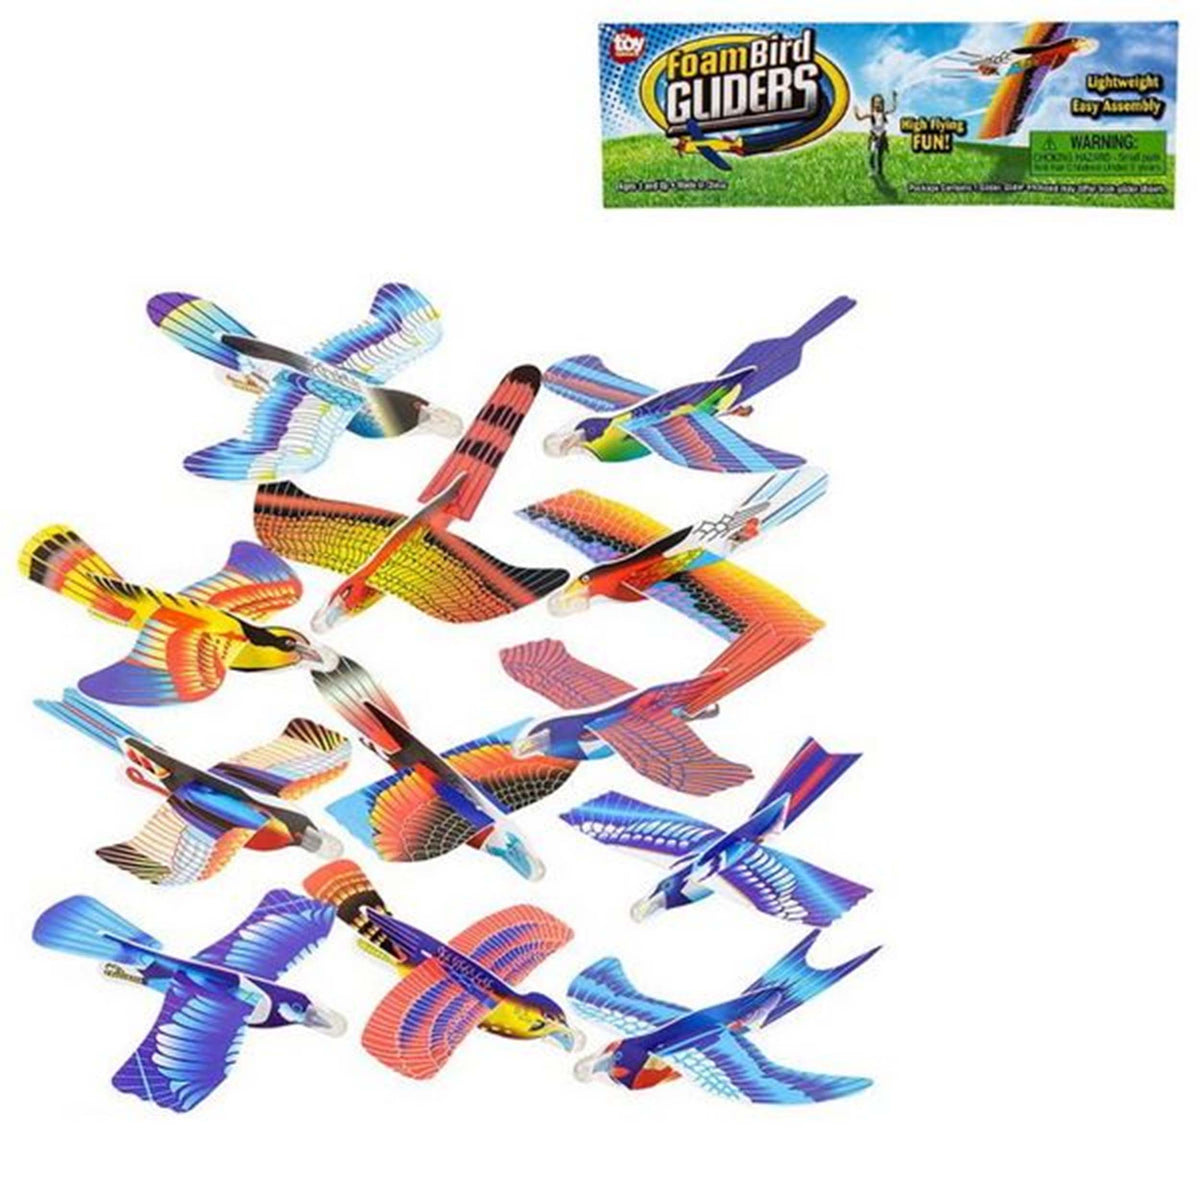 Gliders Bird kids toys In Bulk